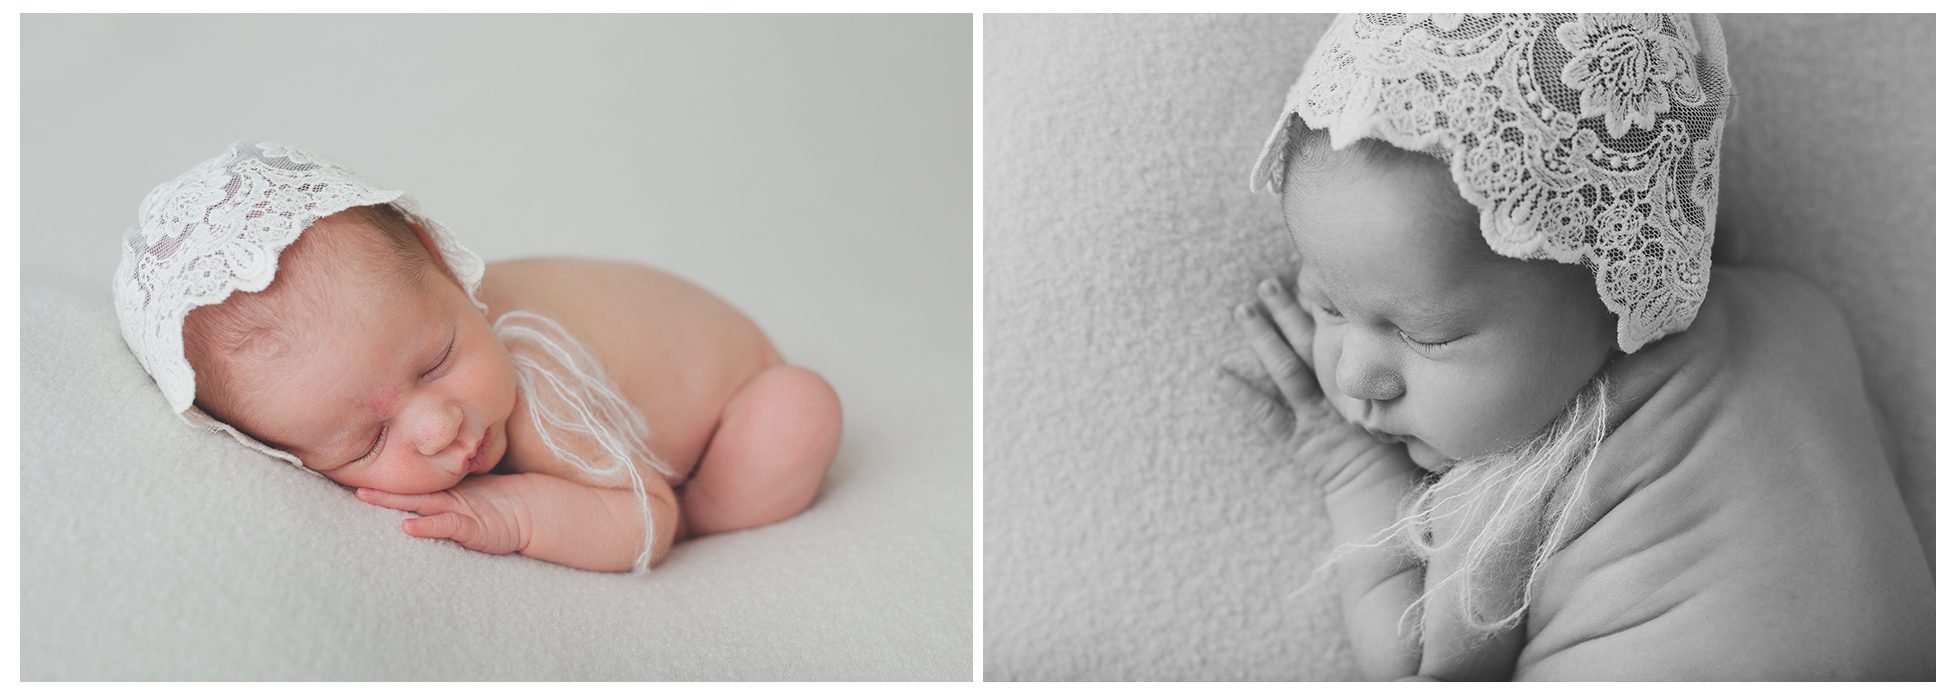 edmonton newborn photography of baby posed on blanket